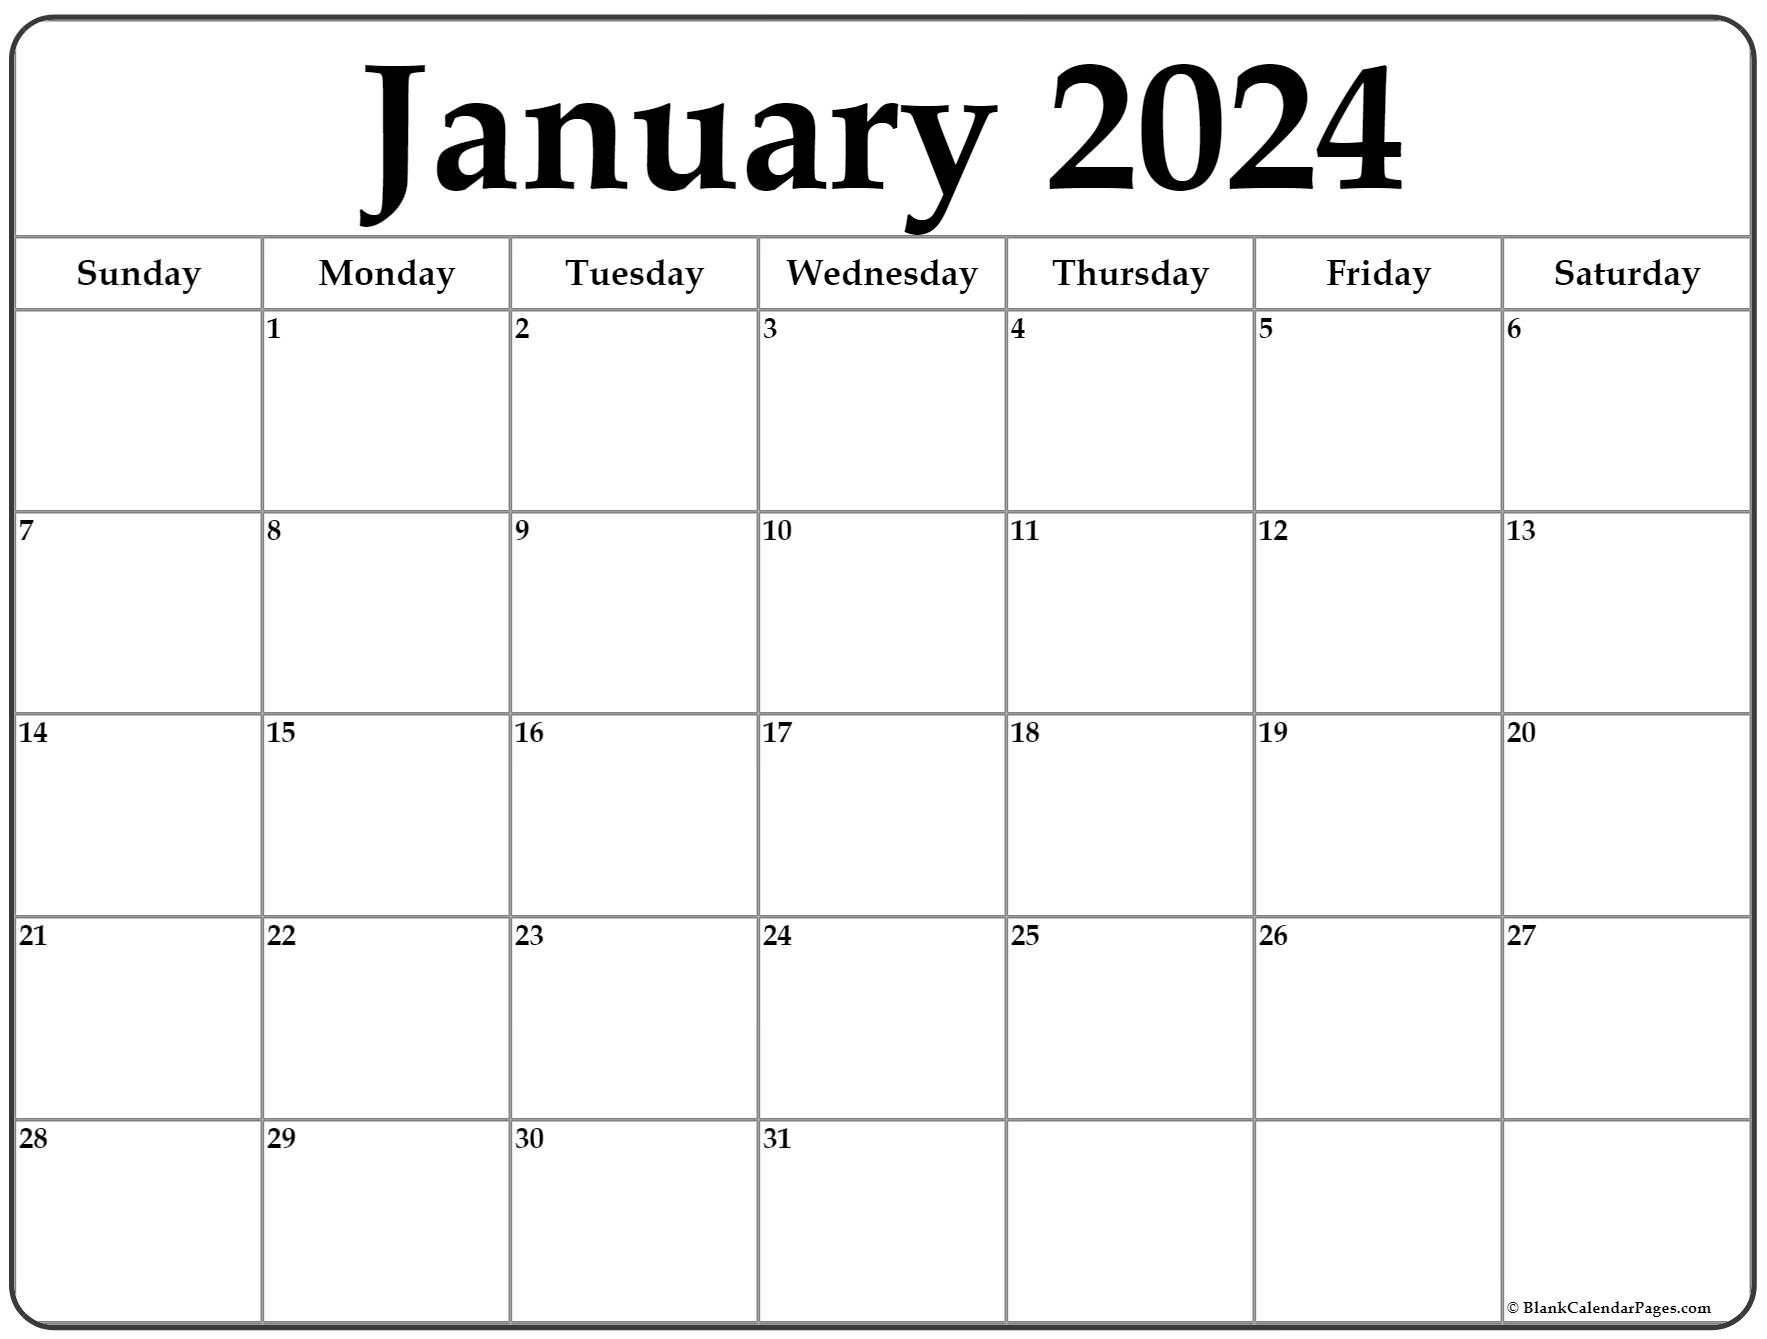 January 2024 Calendar | Free Printable Calendar for Free Printable Calendar Pages 2024